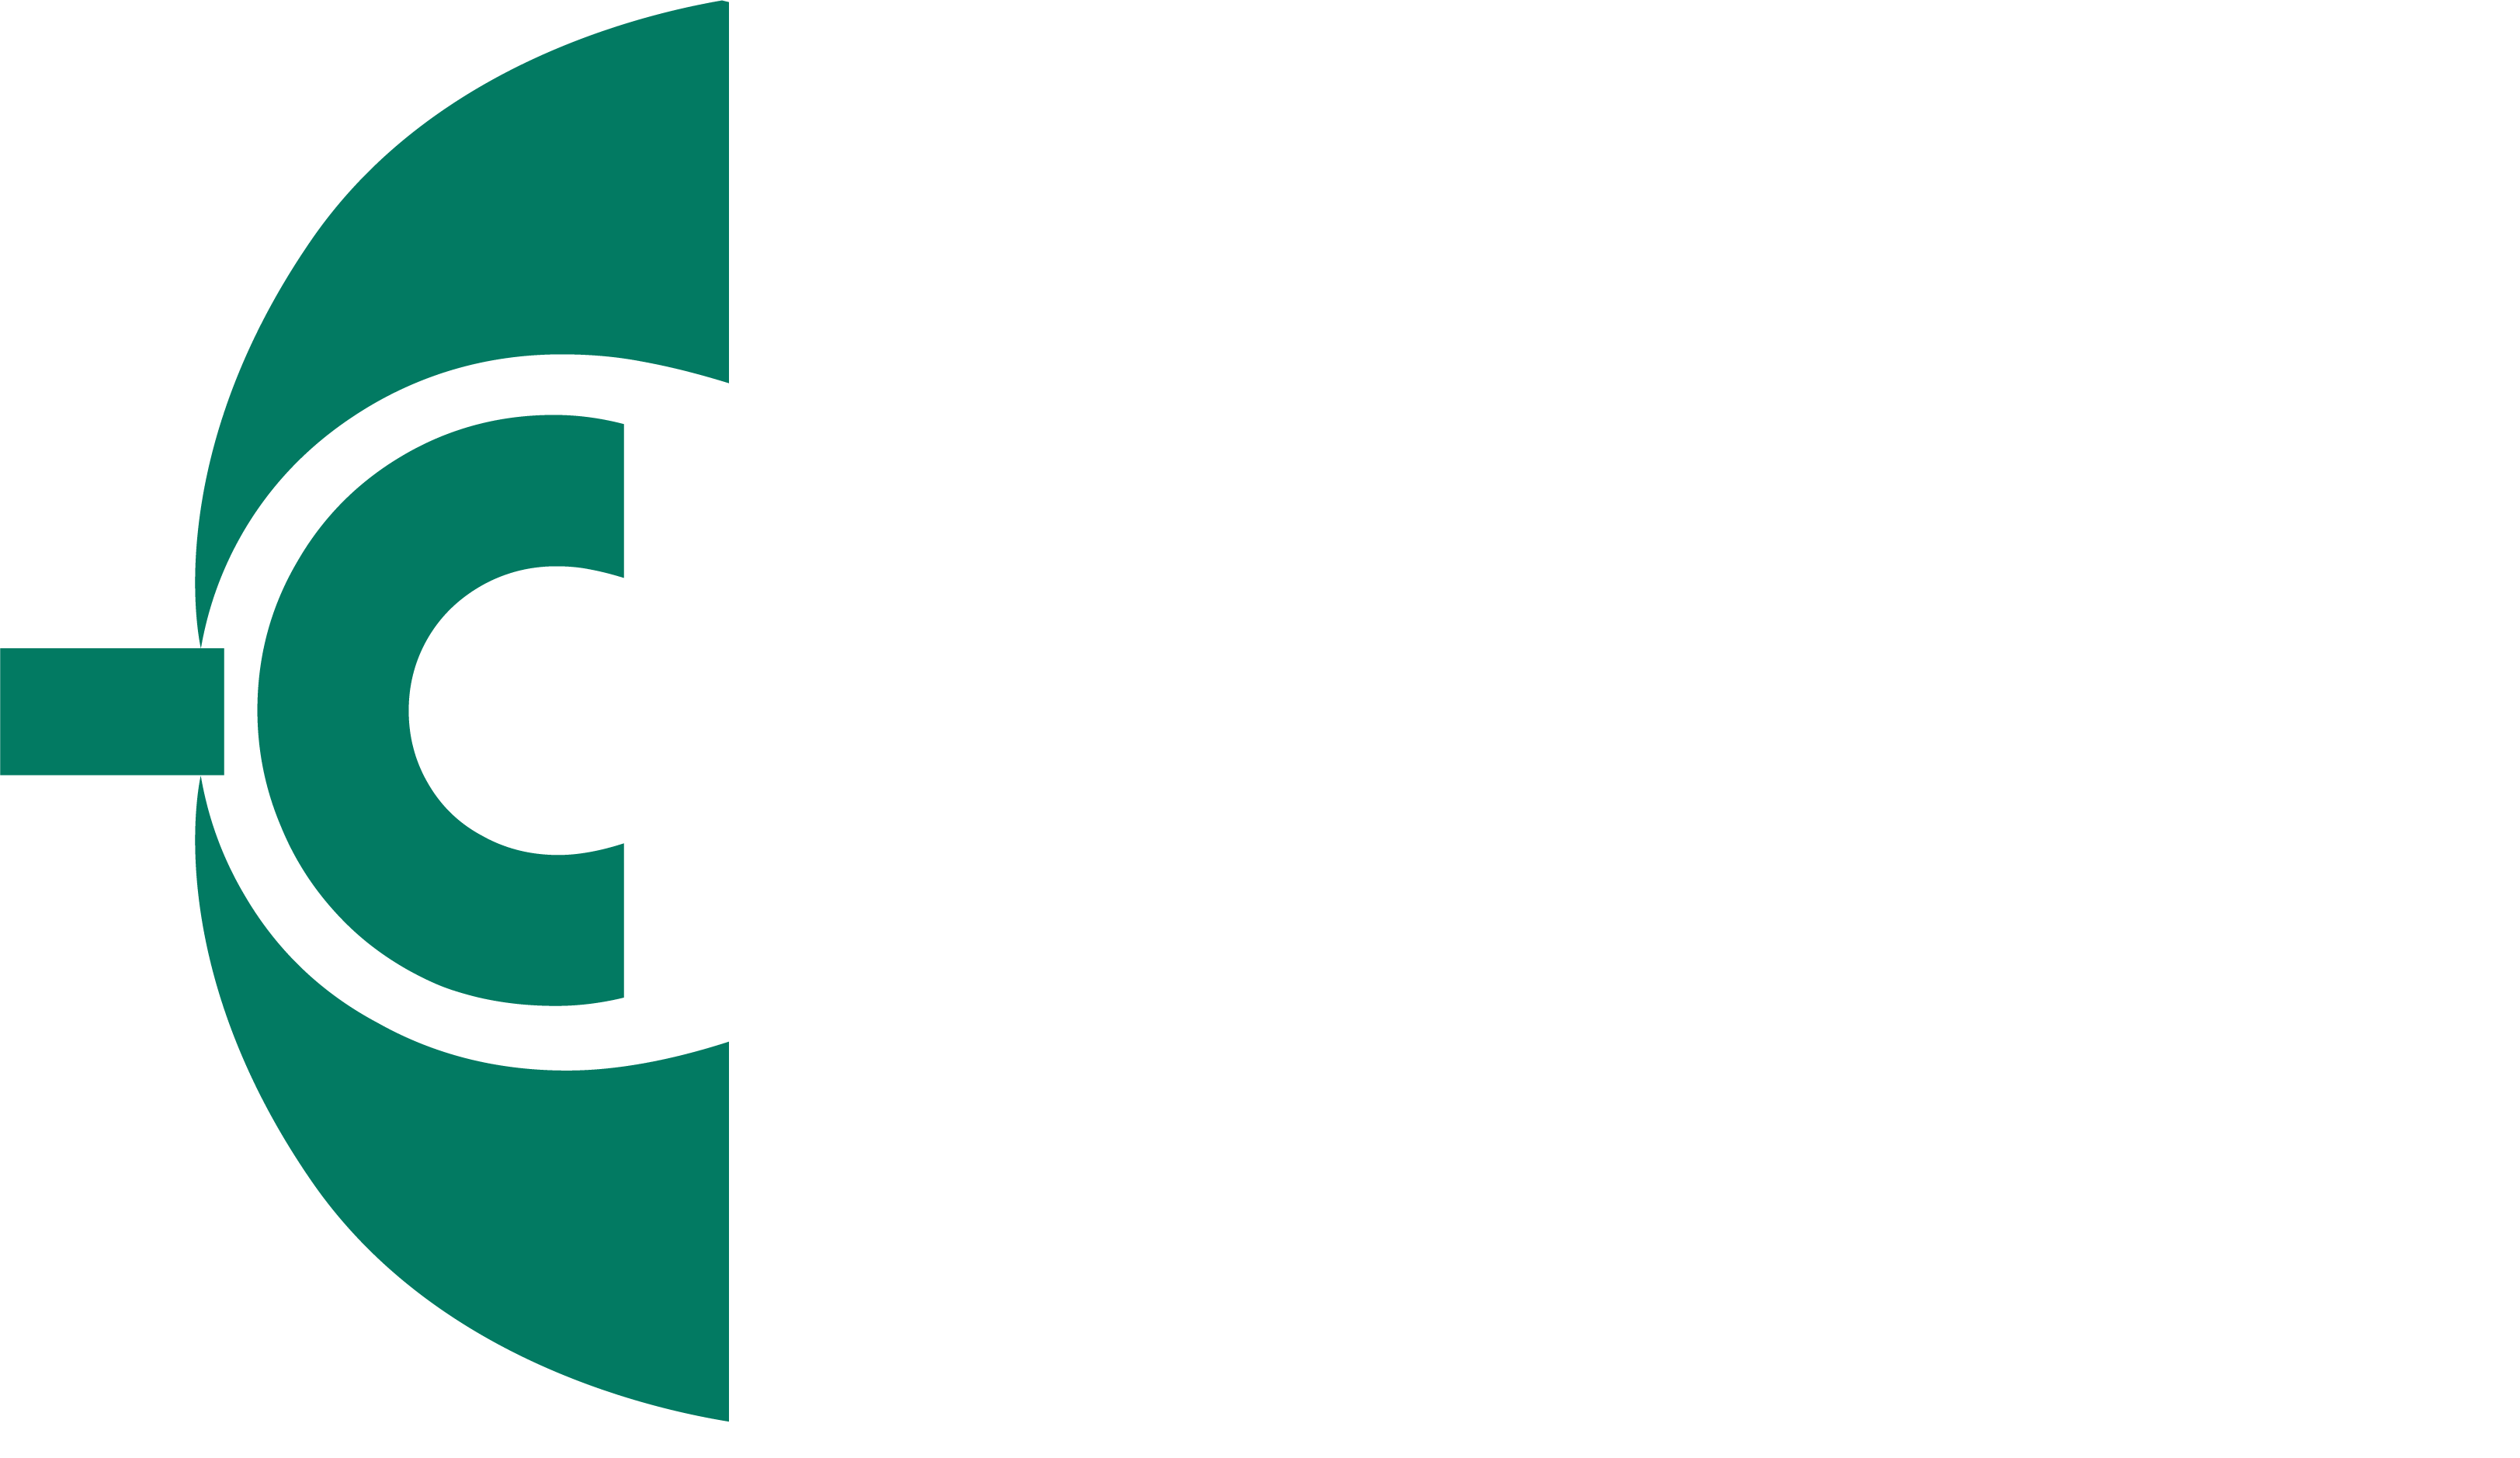 Equinox Ocean Turbines